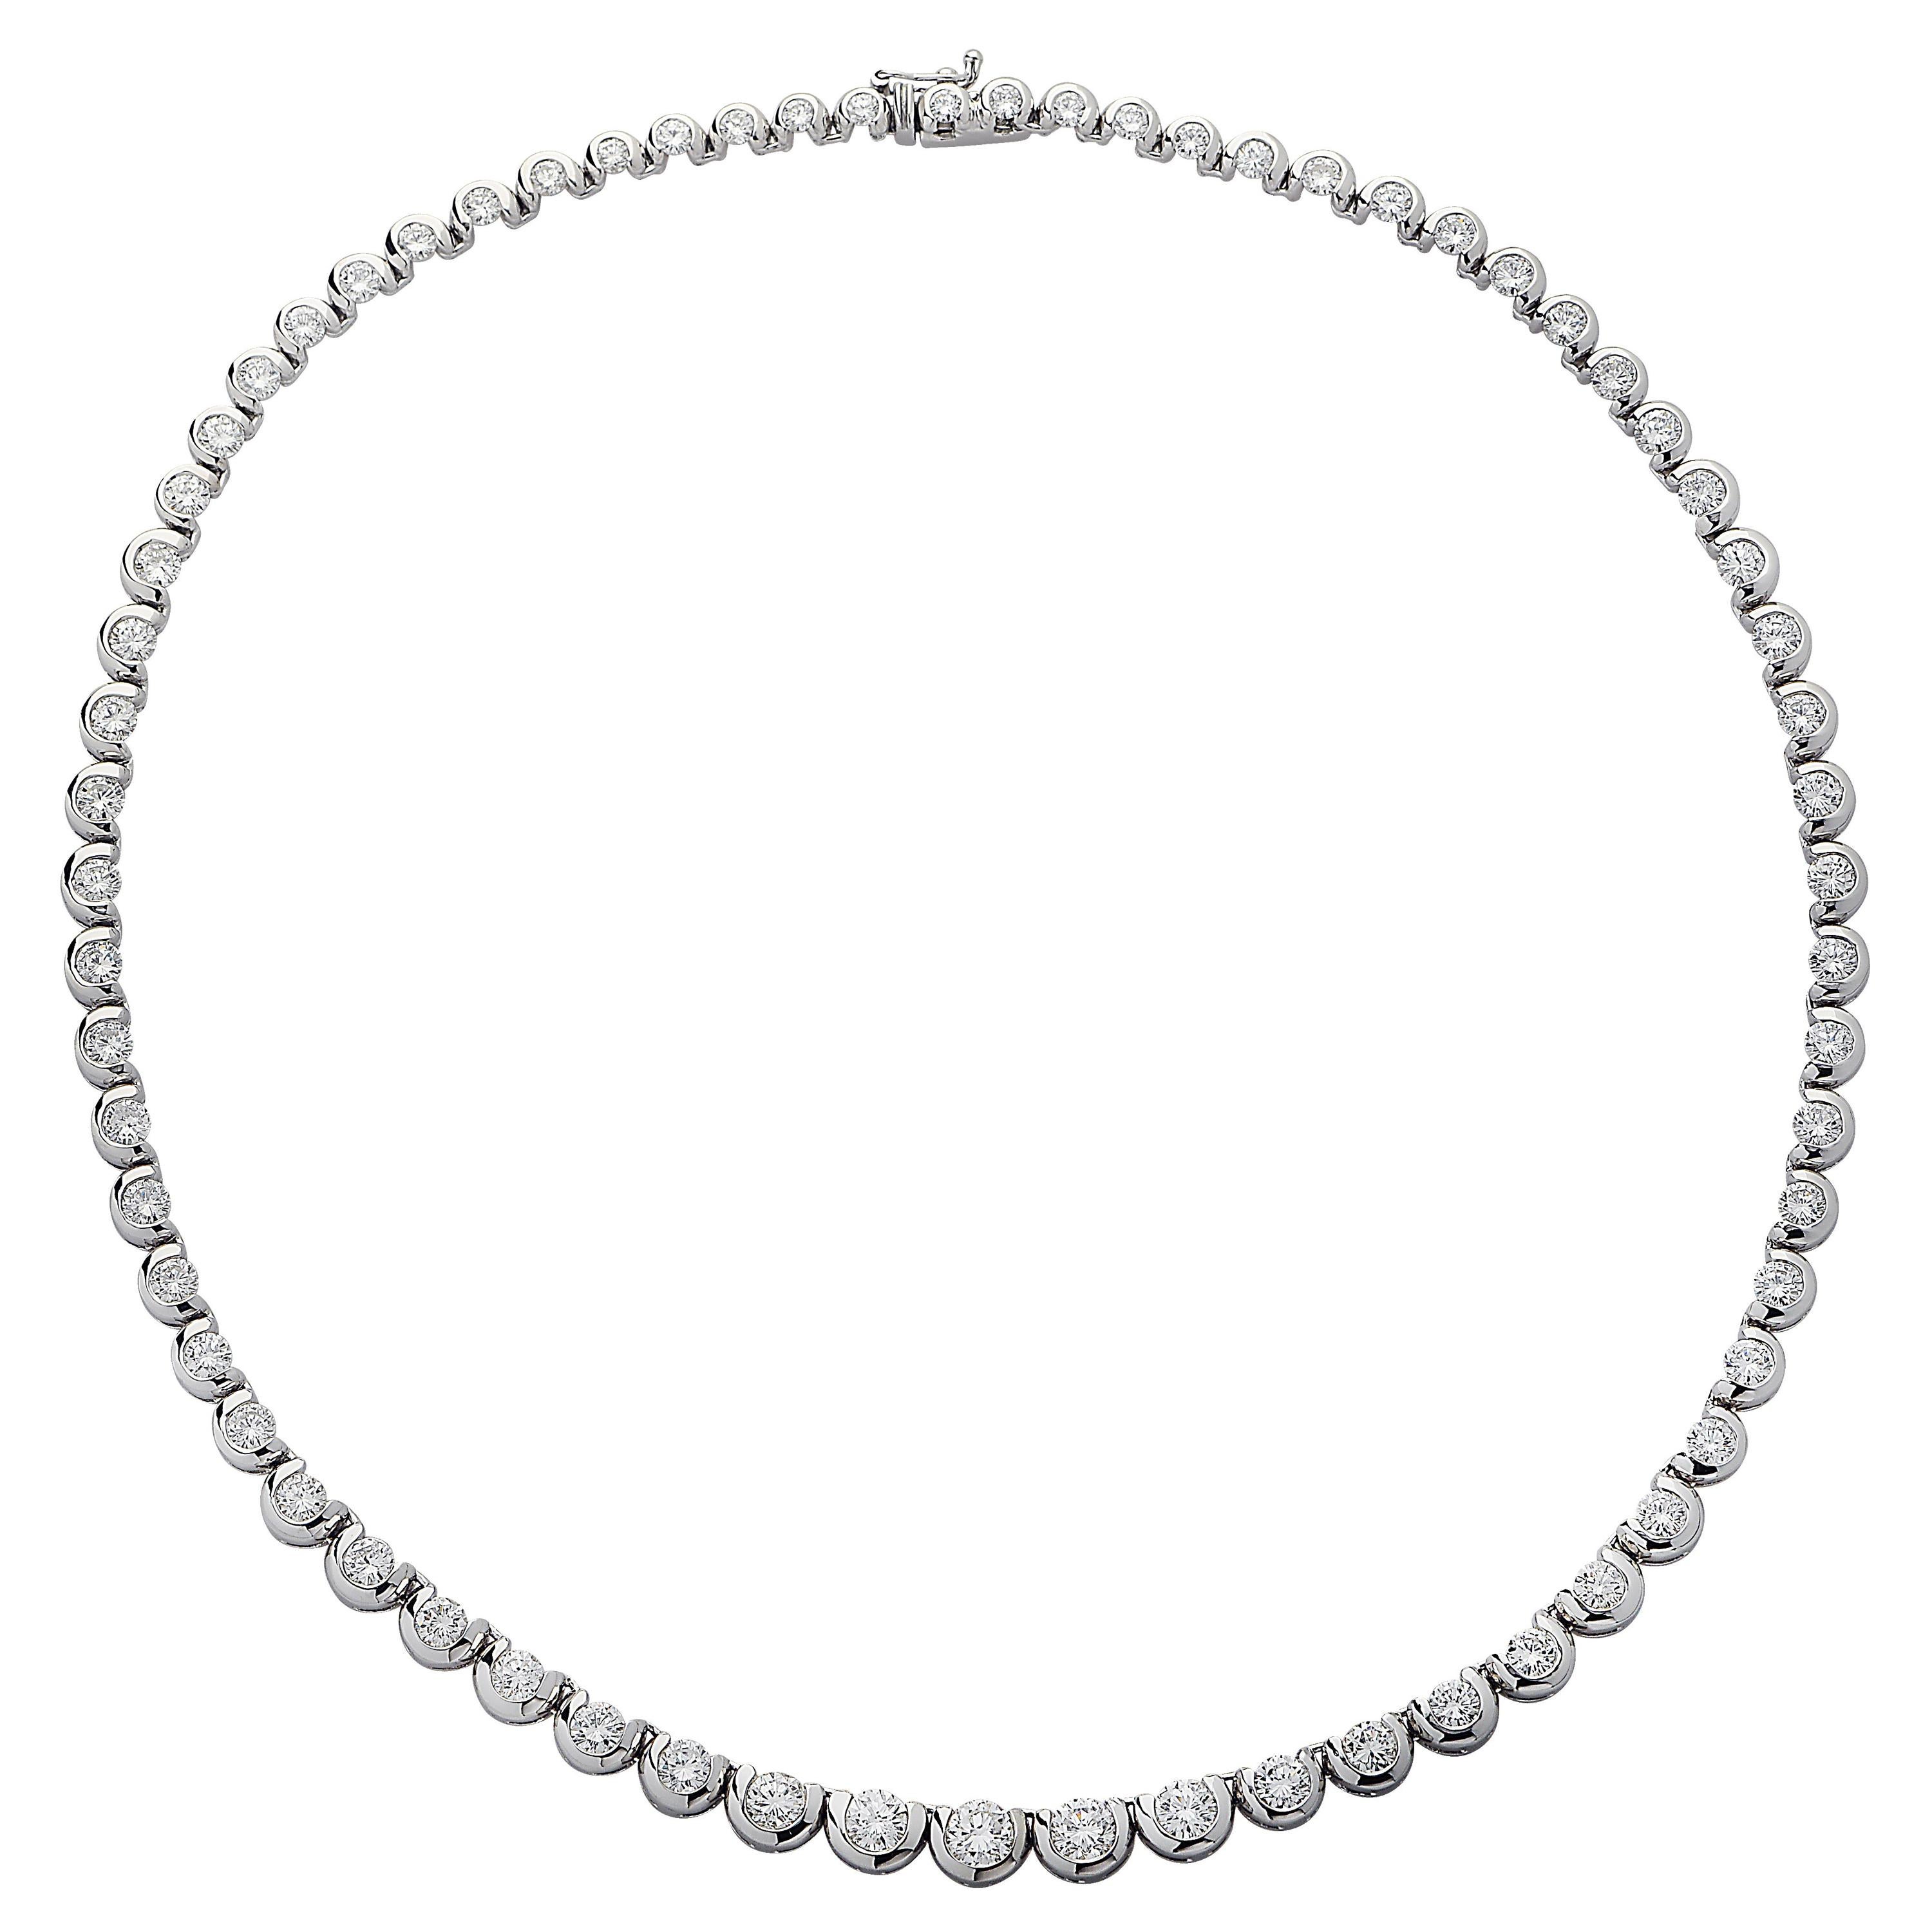 12 Carat Diamond Riviere Necklace